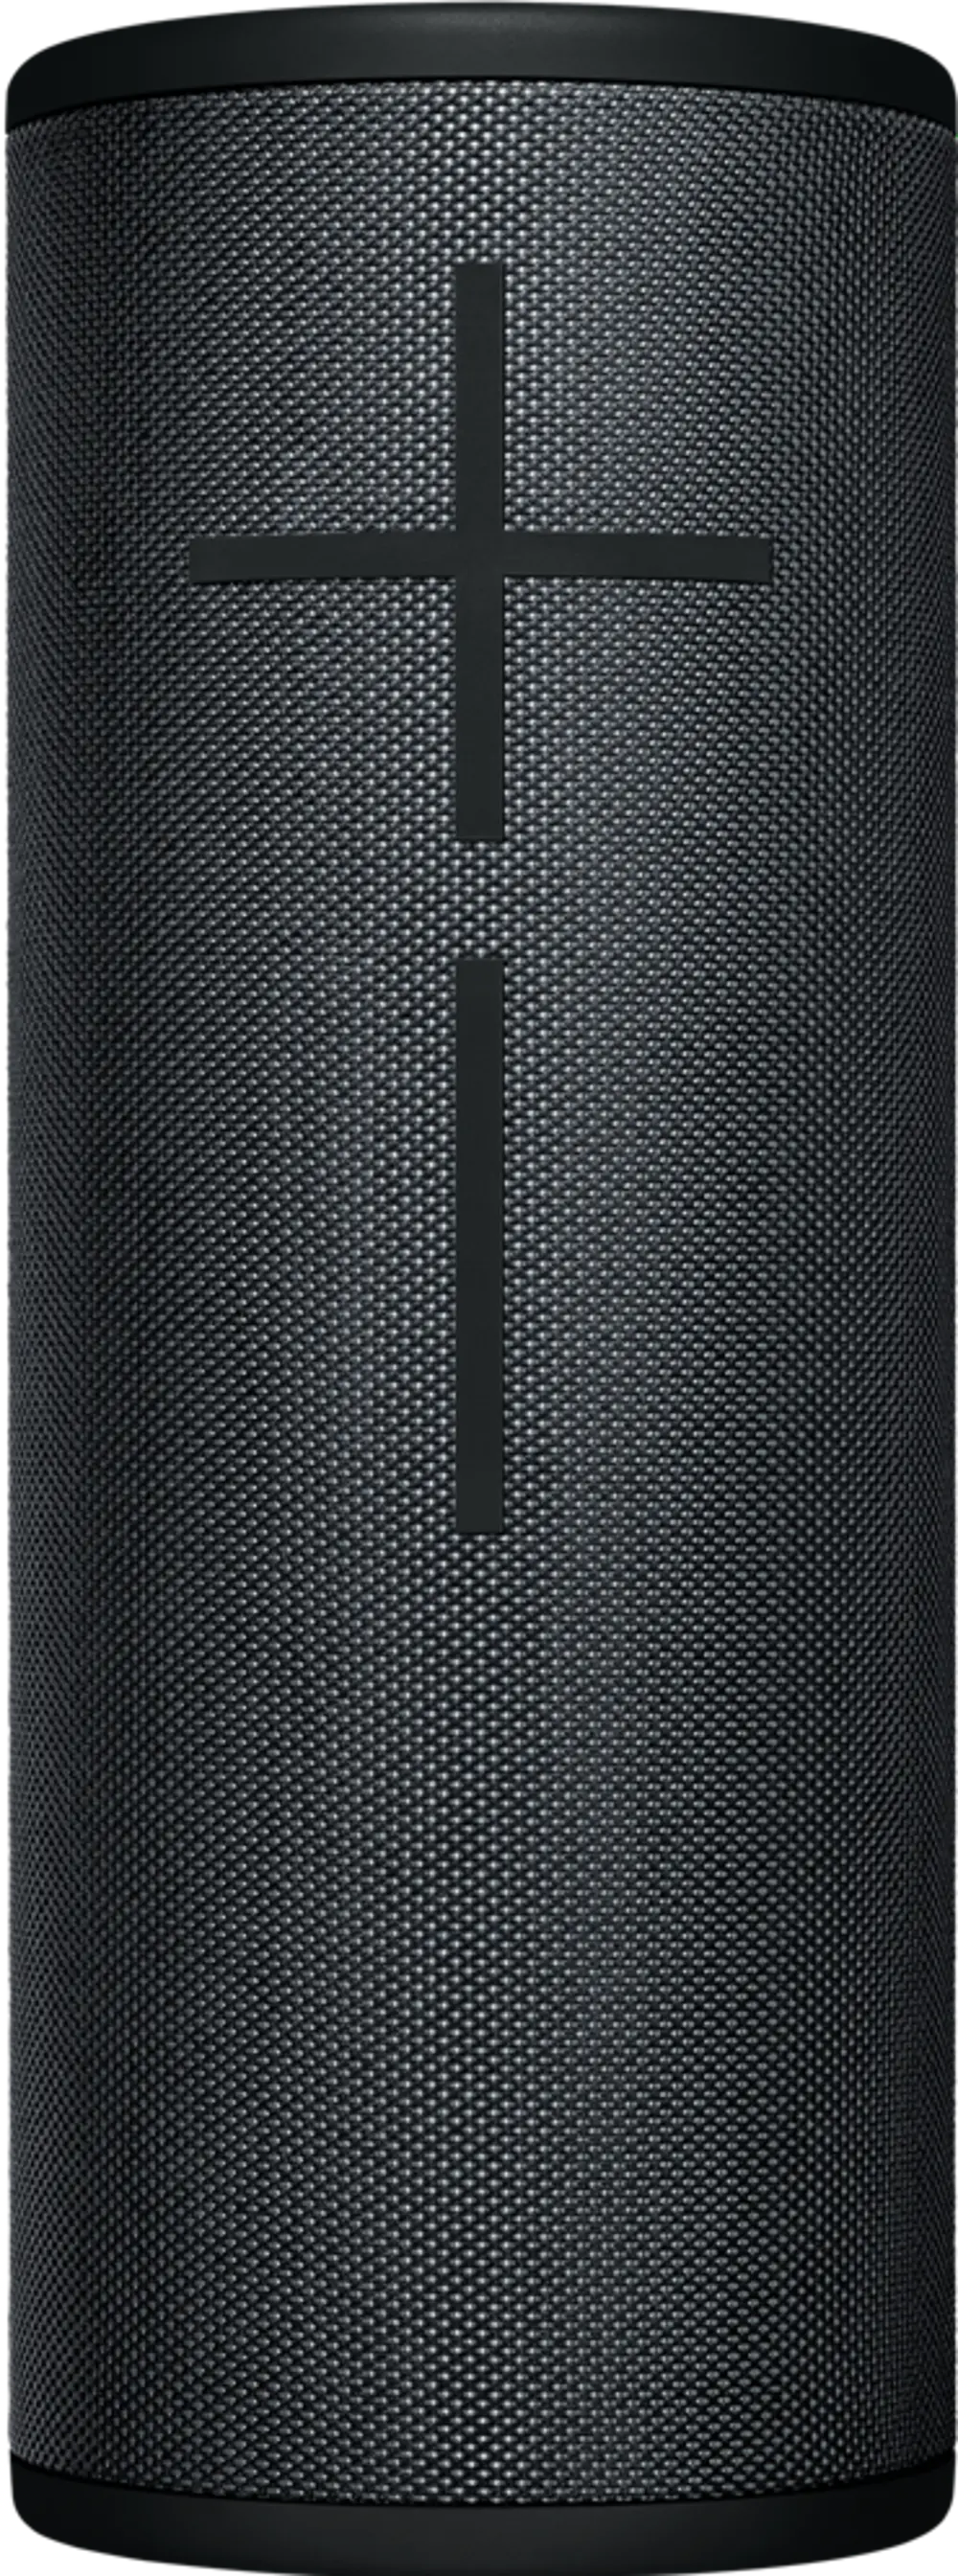 UE,MEGABOOM3-SPKR,NIGHT BLACK Ultimate Ears MEGABOOM 3 Portable Bluetooth Speaker - Nightblack-1